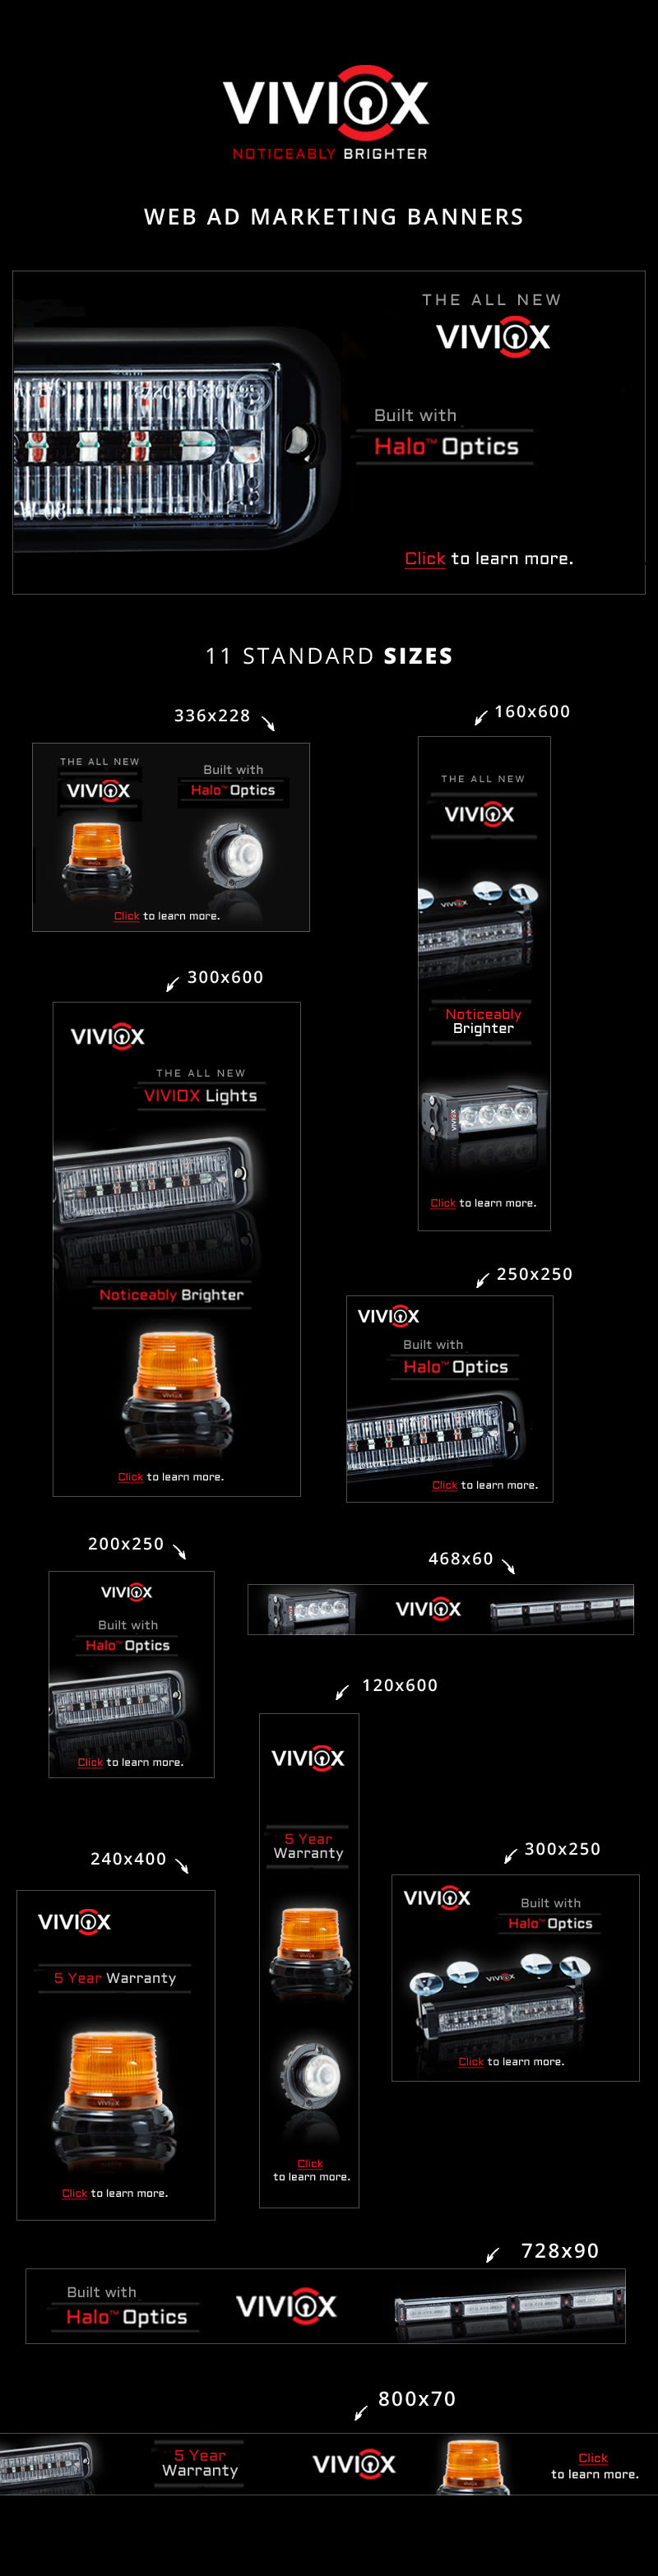 Viviox Web Ad Marketing Banners 0